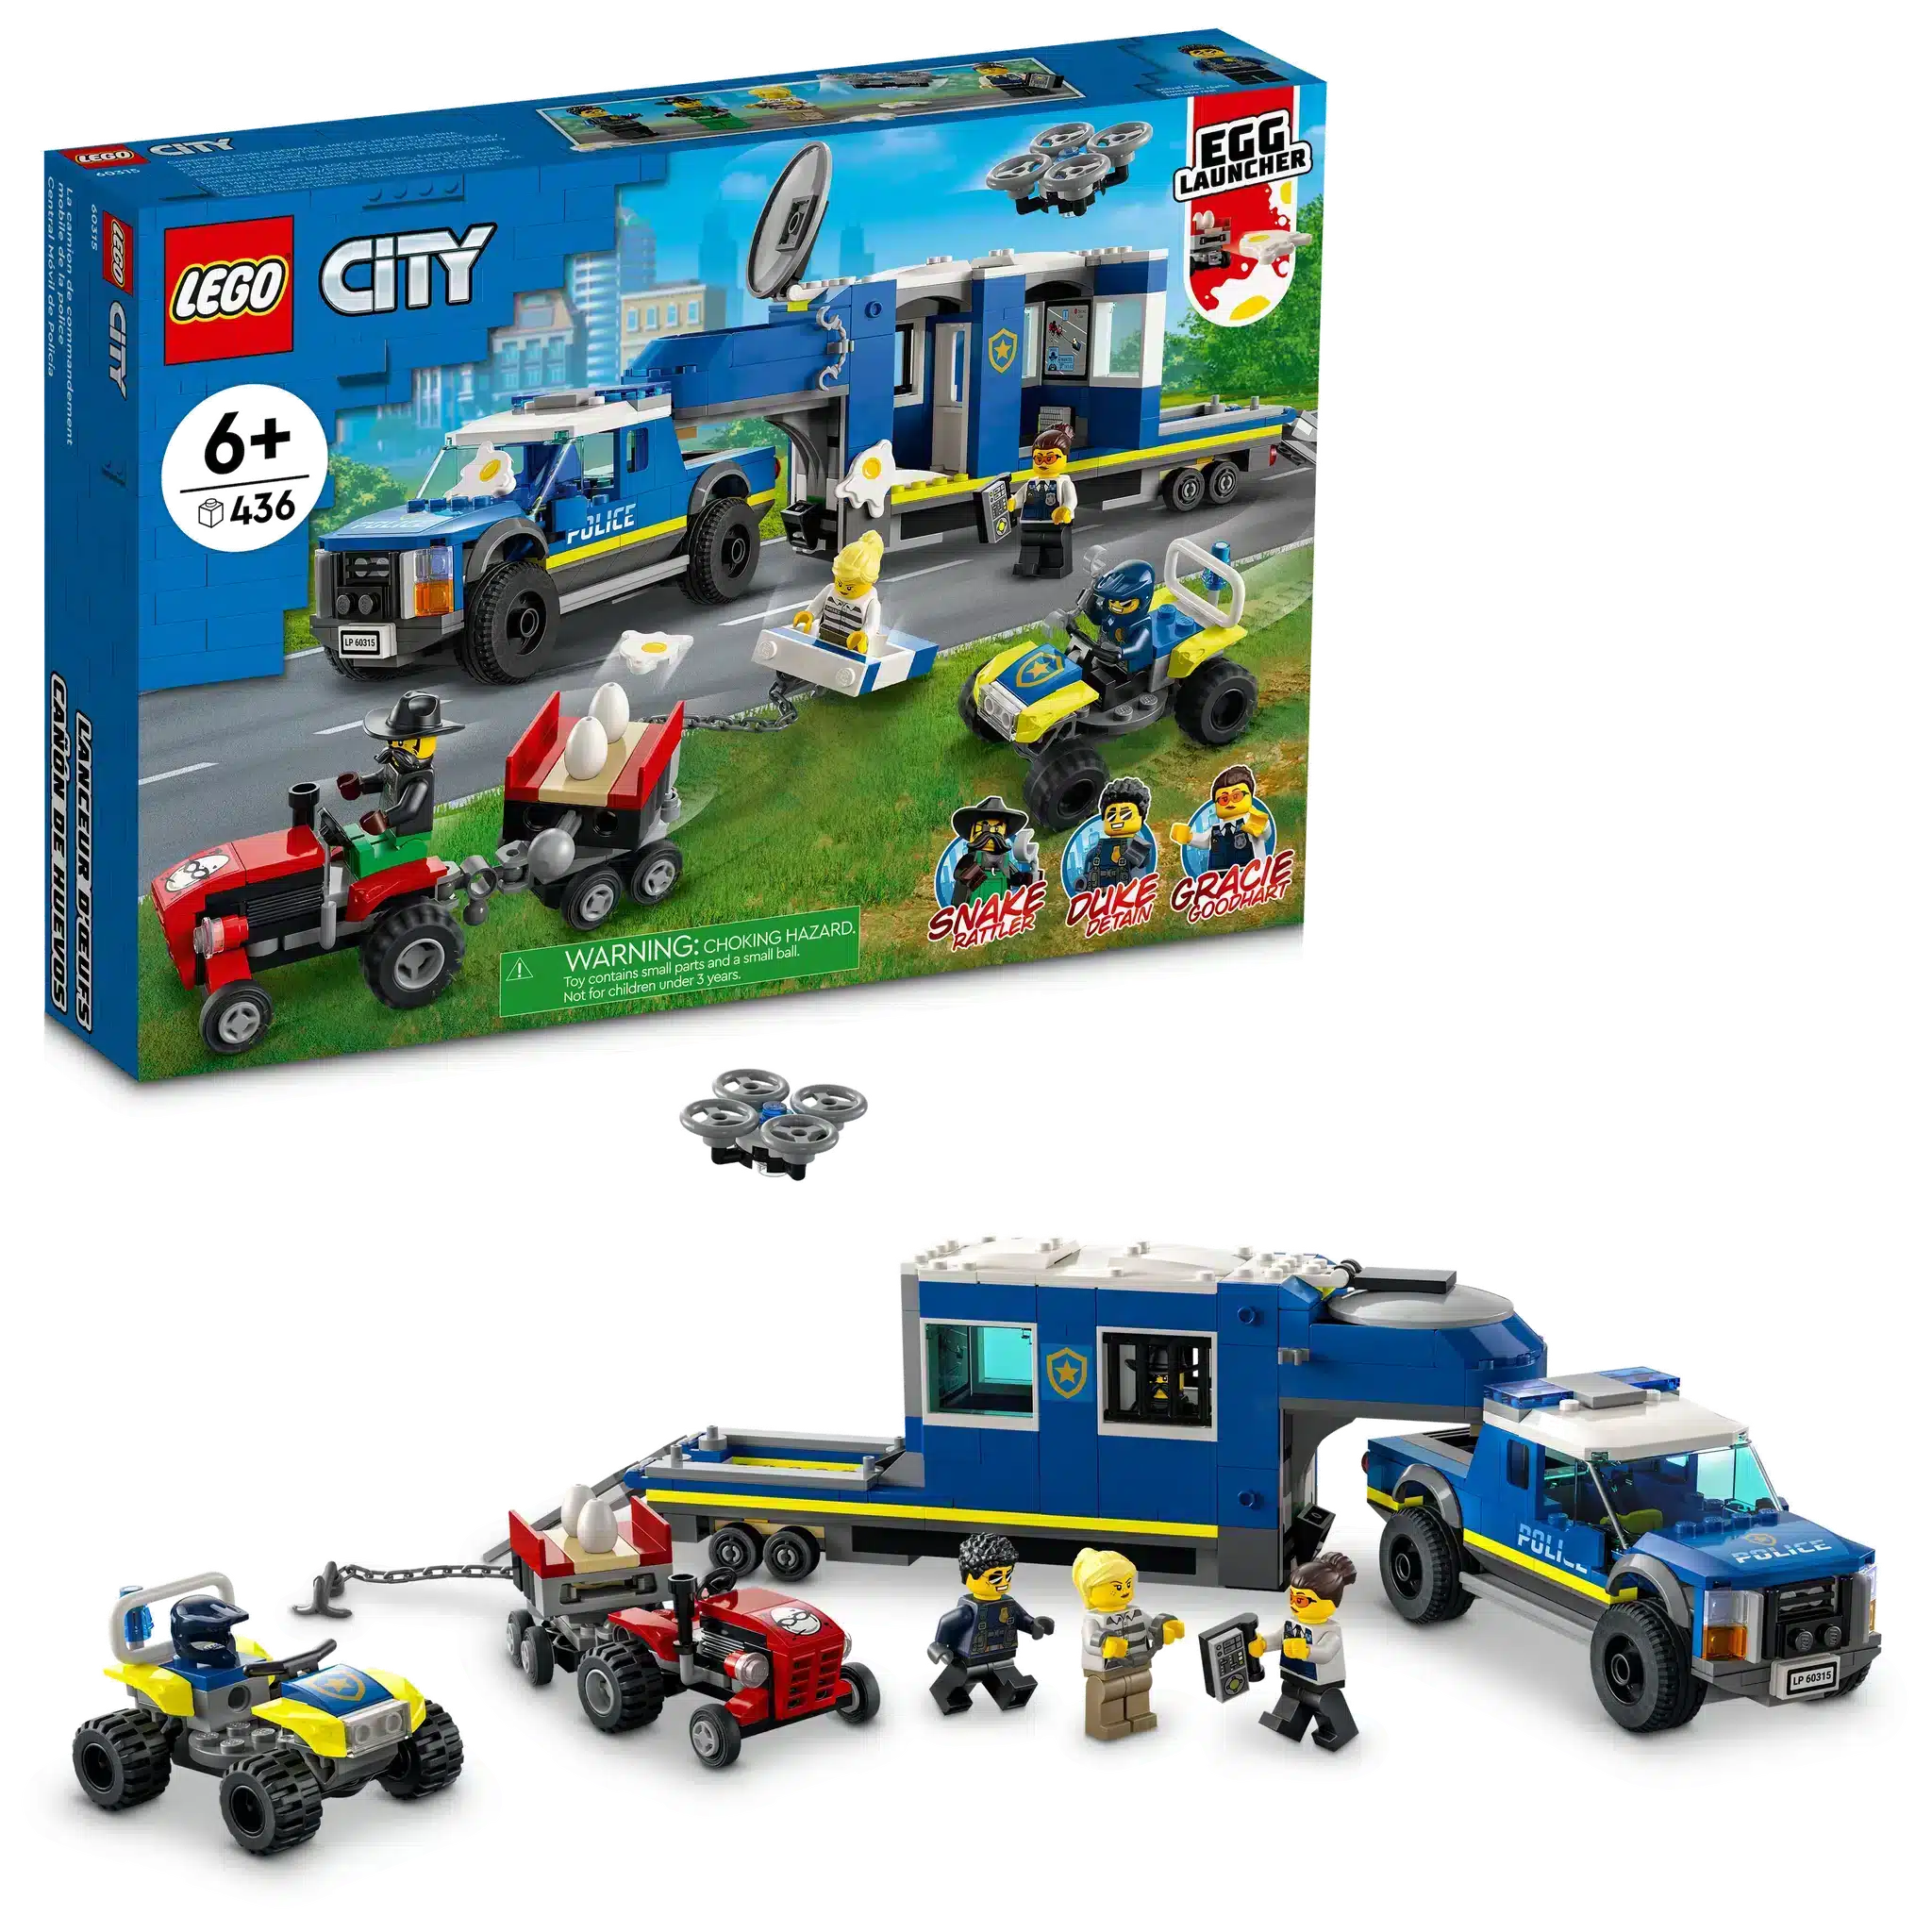 LEGO City 60312 Police Car